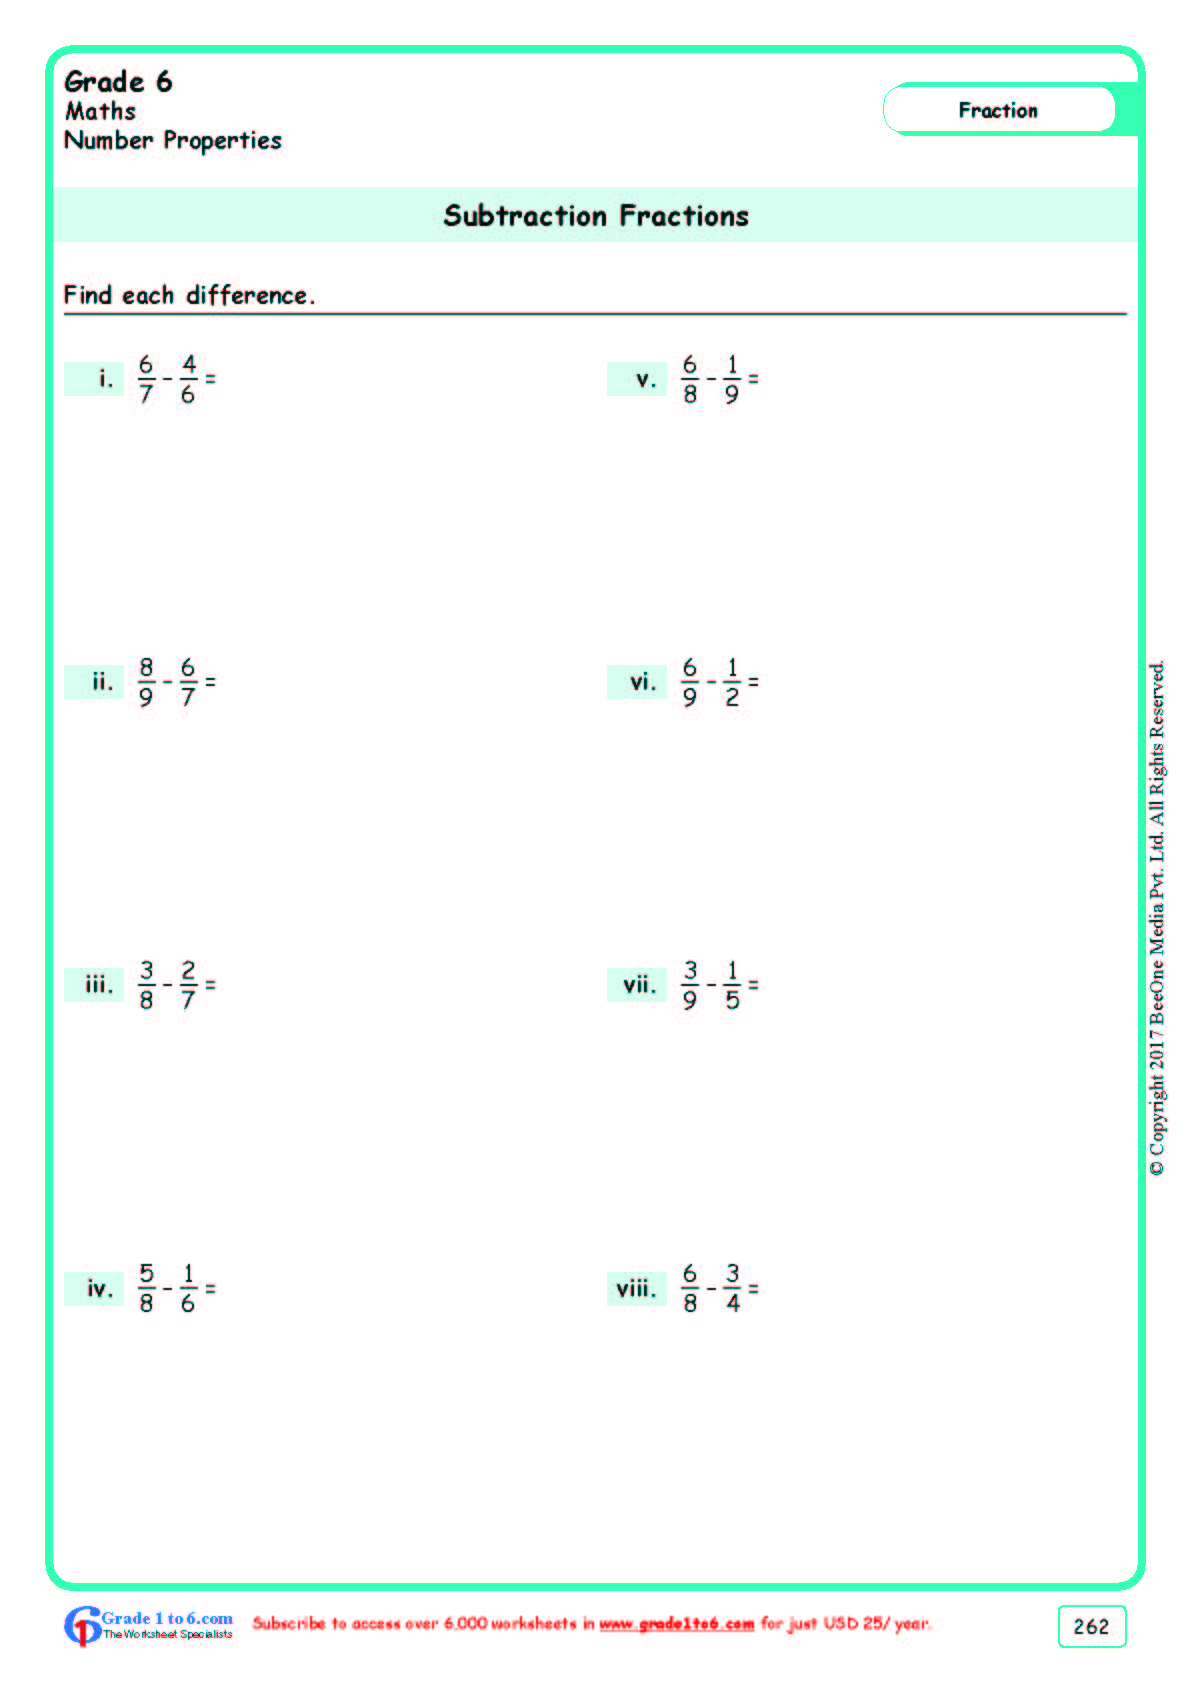 Grade 6|Subtracting Fractions Worksheets|www.grade1to6.com